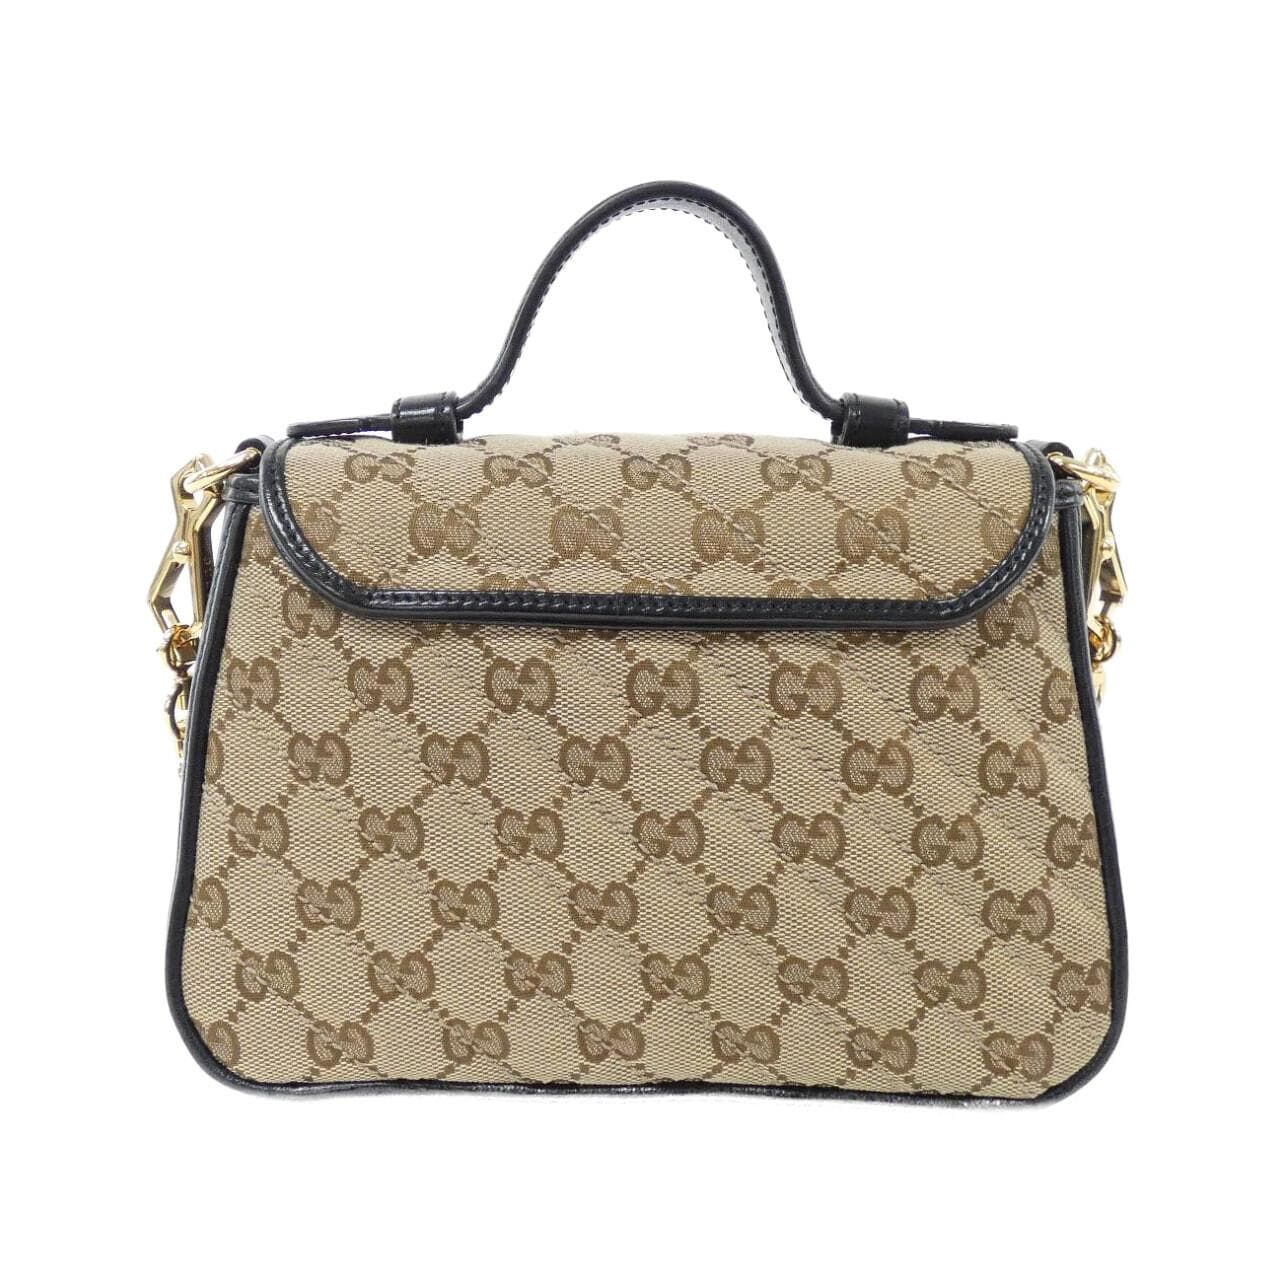 Gucci GG MARMONT 583571 HVKEG Bag